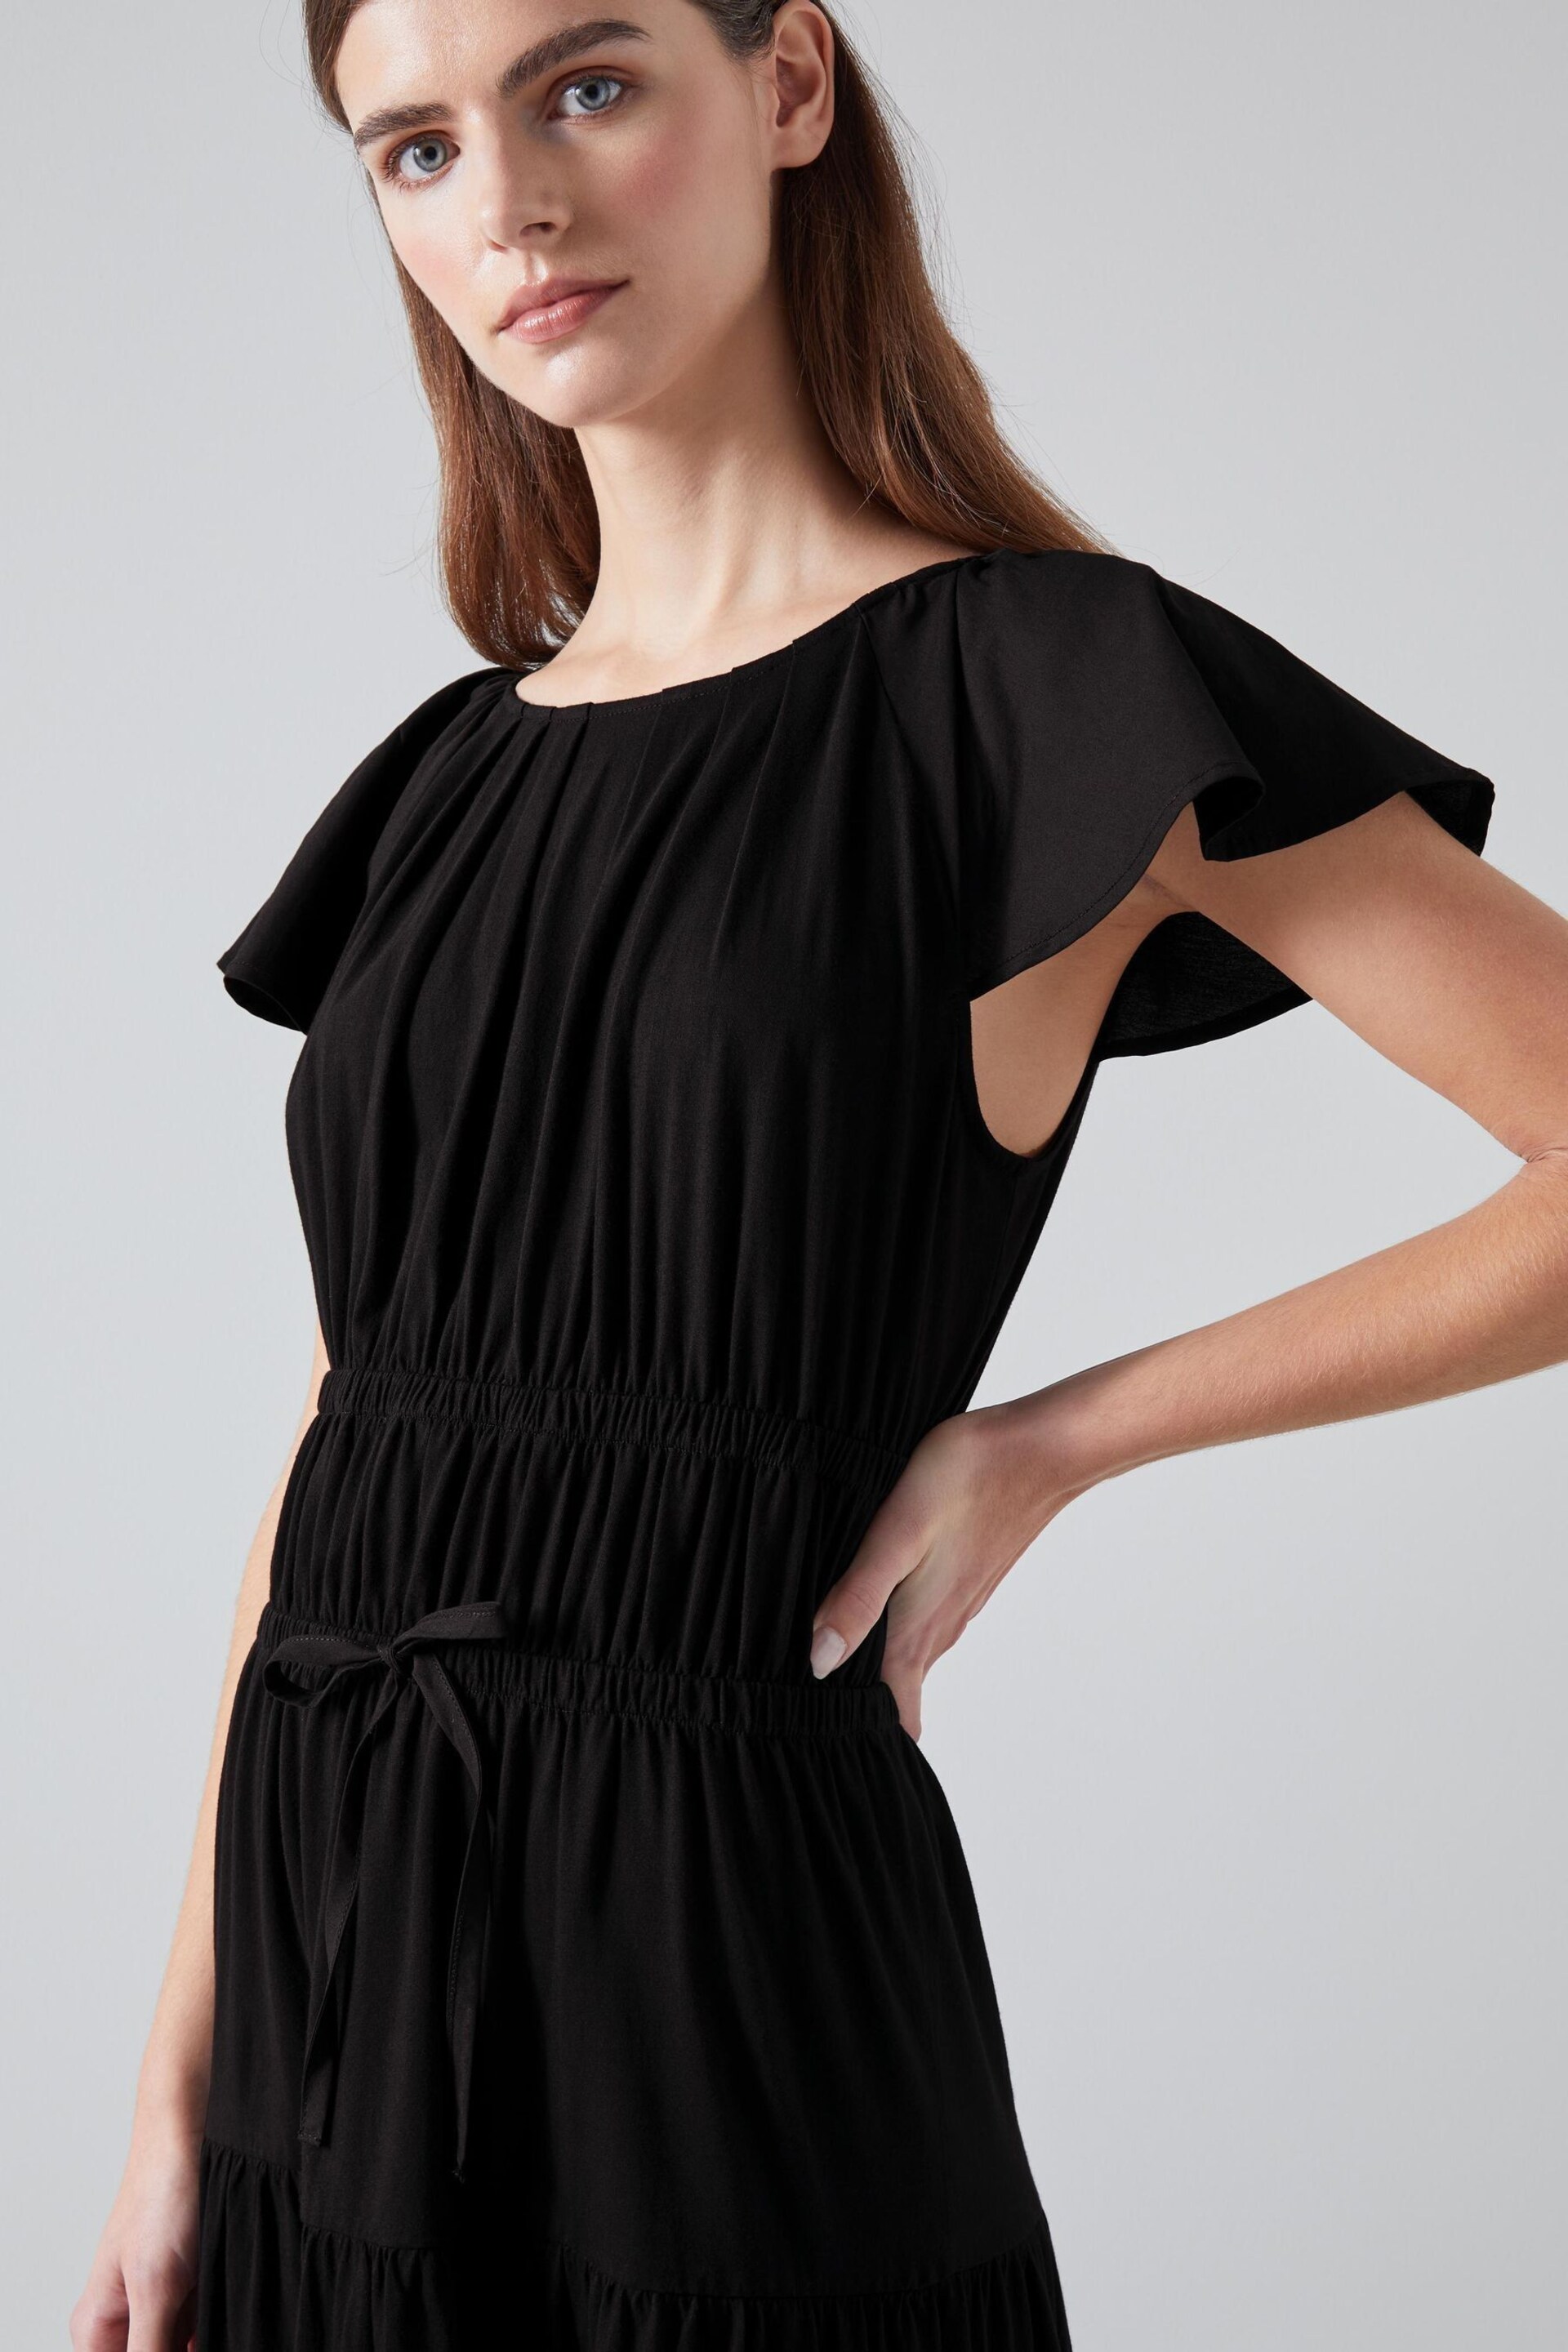 LK Bennett Carla Cotton Lenzing™ Ecovero™ Viscose Maxi Dress - Image 3 of 3